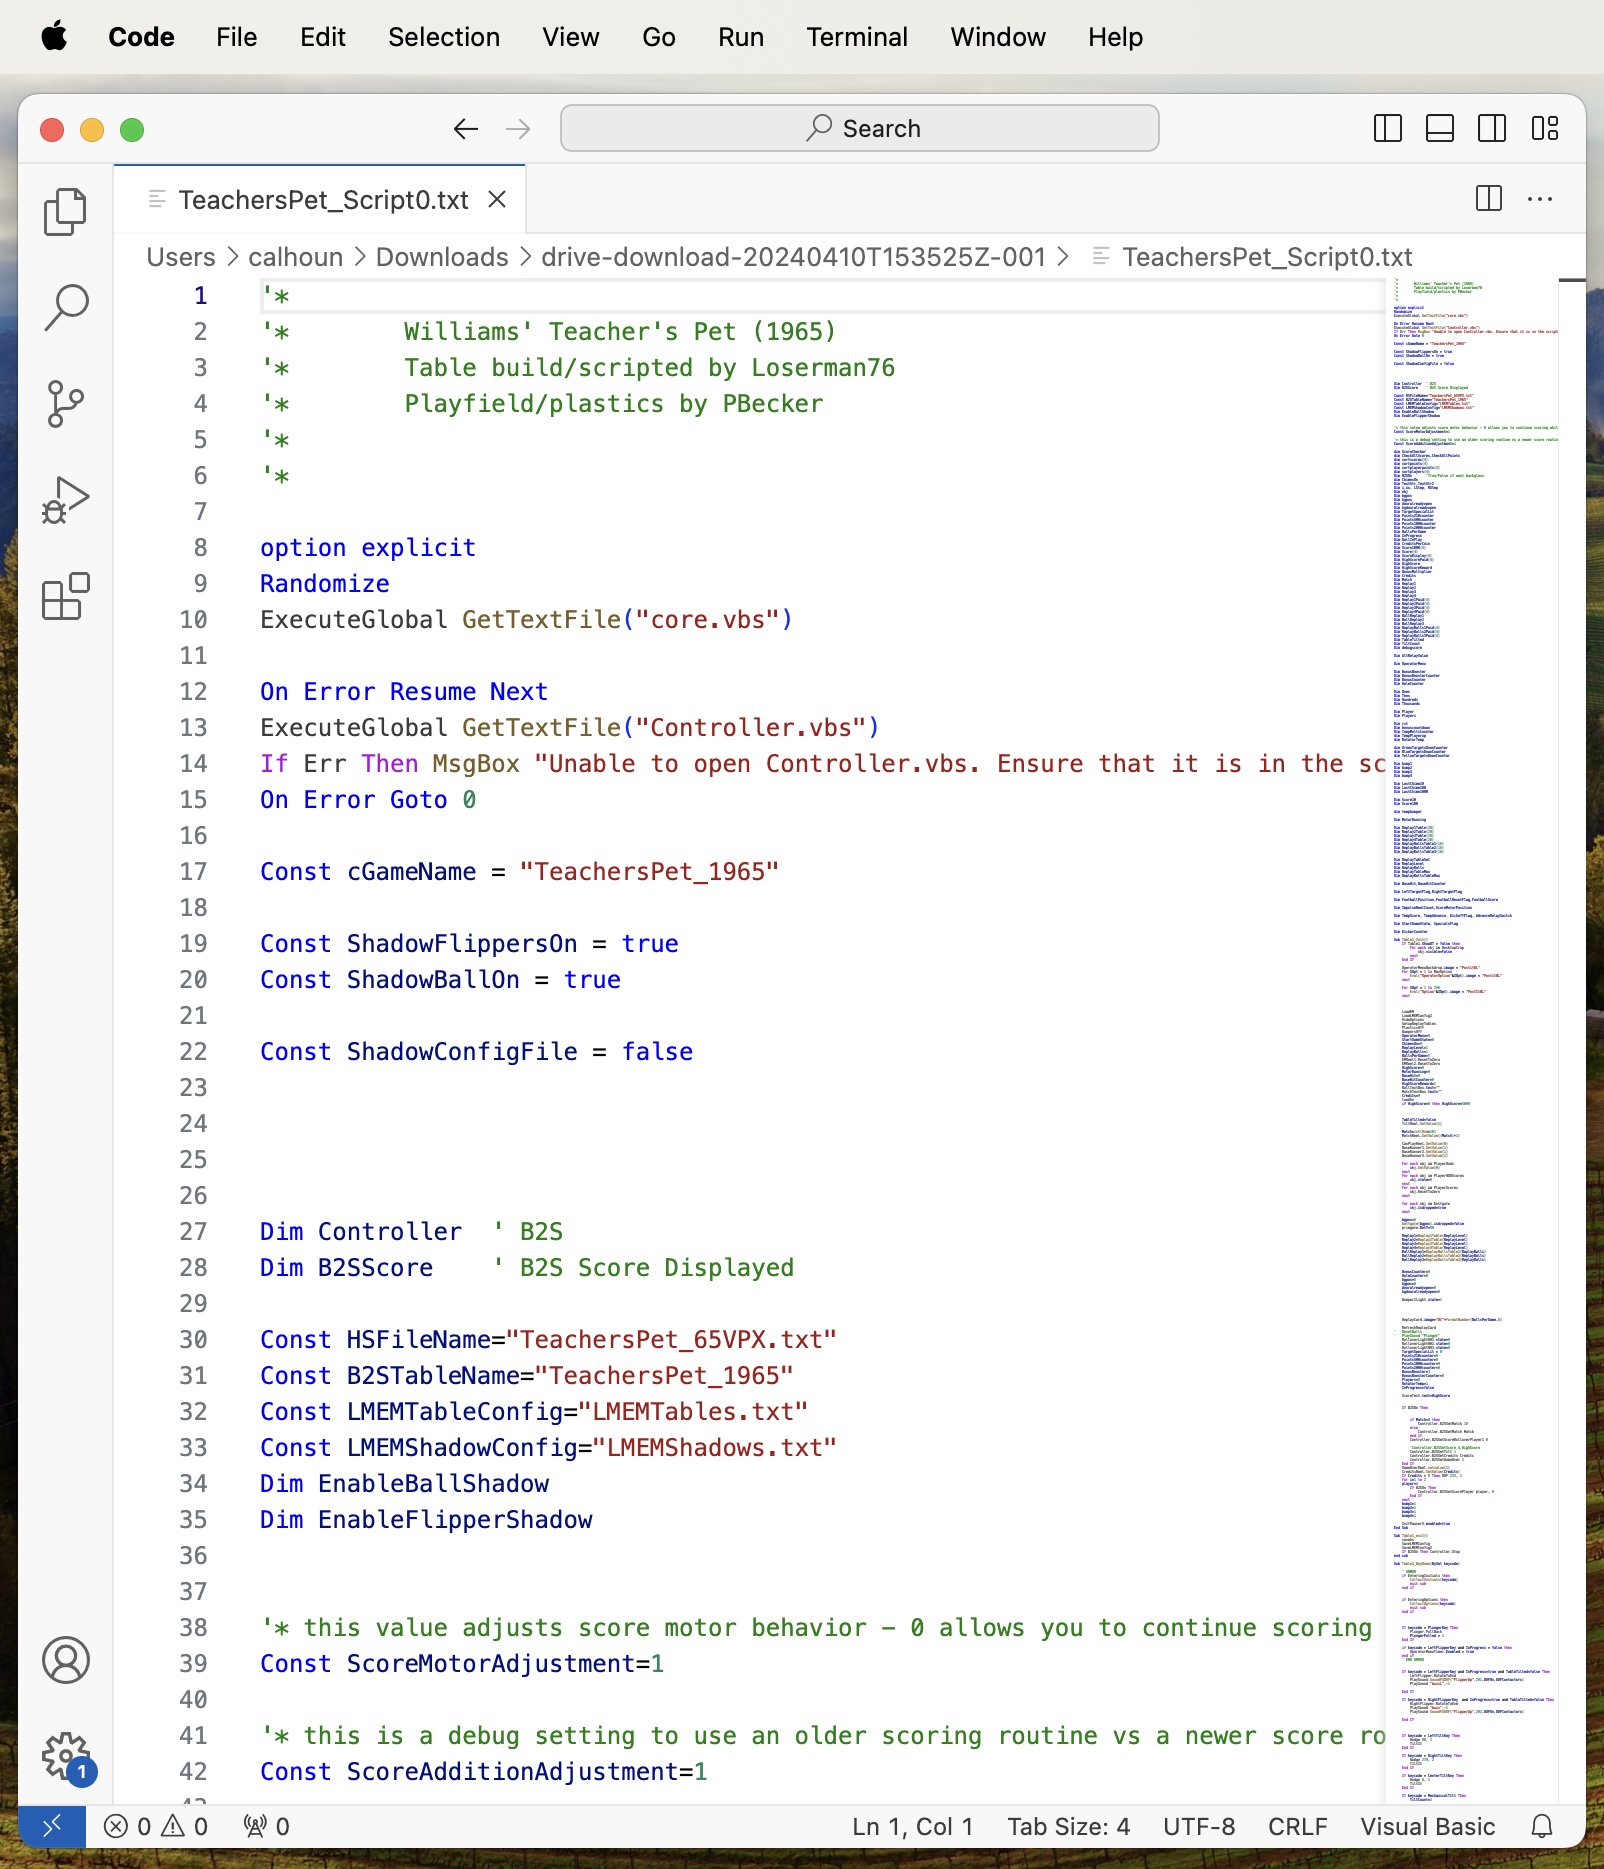 The script open in Visual Studio Code.